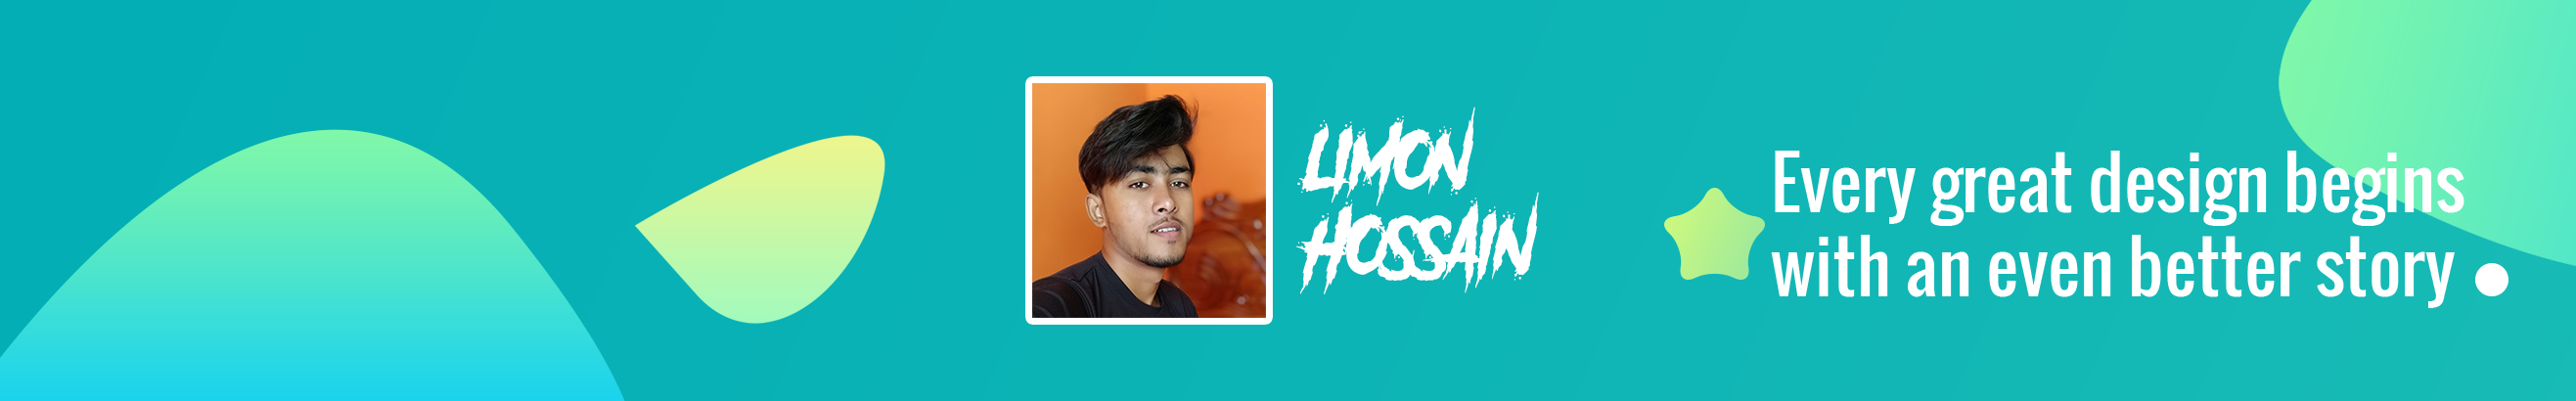 Limon Hossain's profile banner